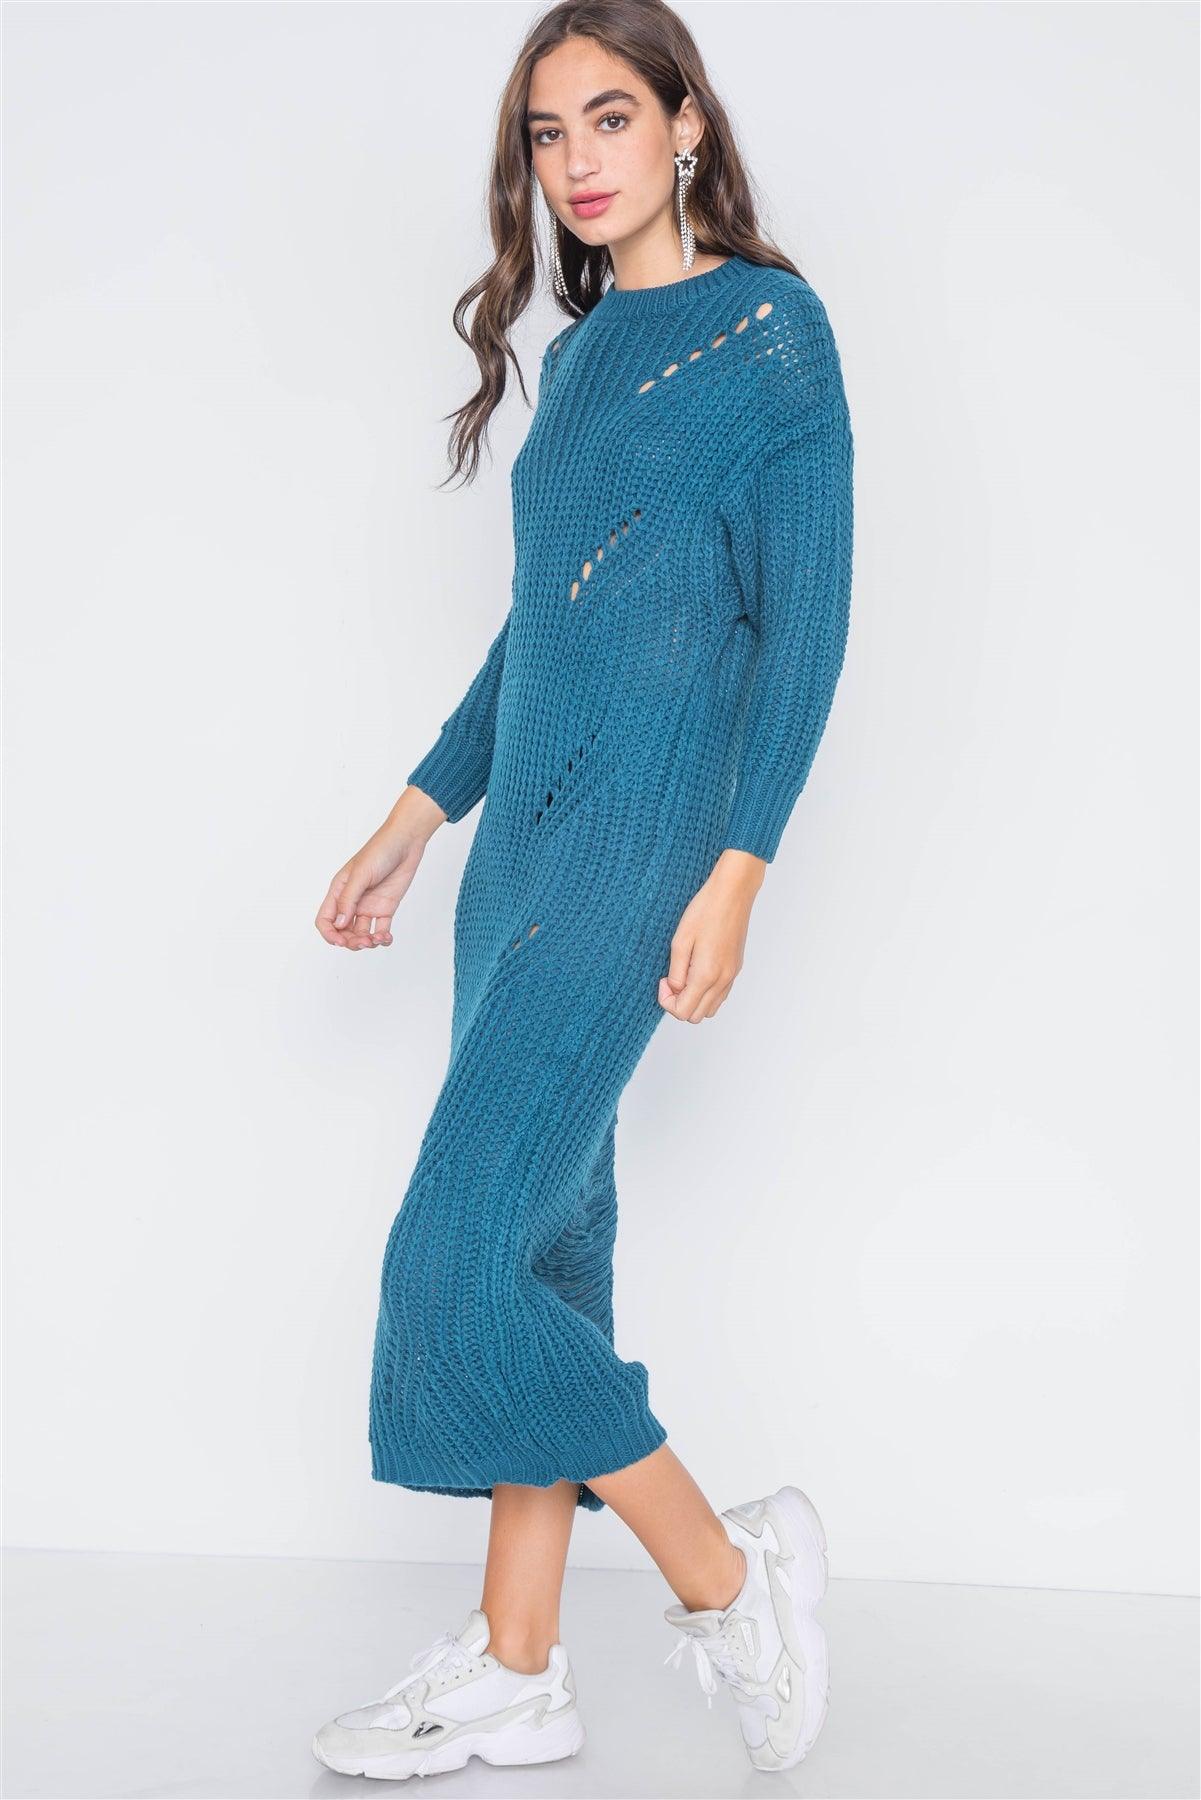 Teal Chunky Knit Long Sleeve Sweater Dress / 2-3